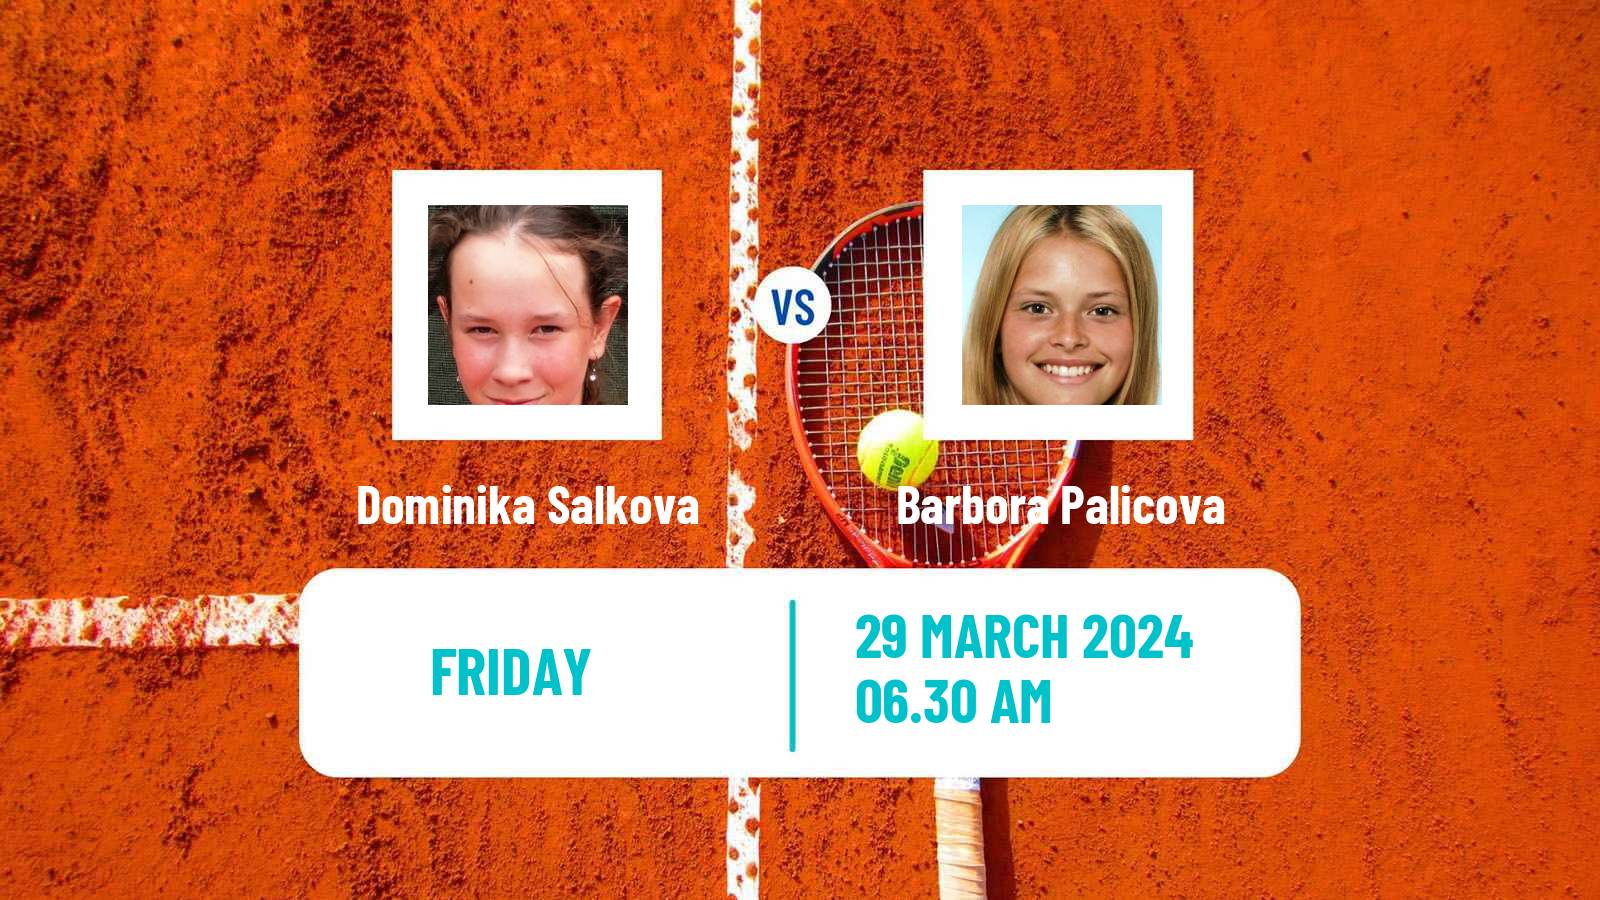 Tennis ITF W50 Murska Sobota Women Dominika Salkova - Barbora Palicova